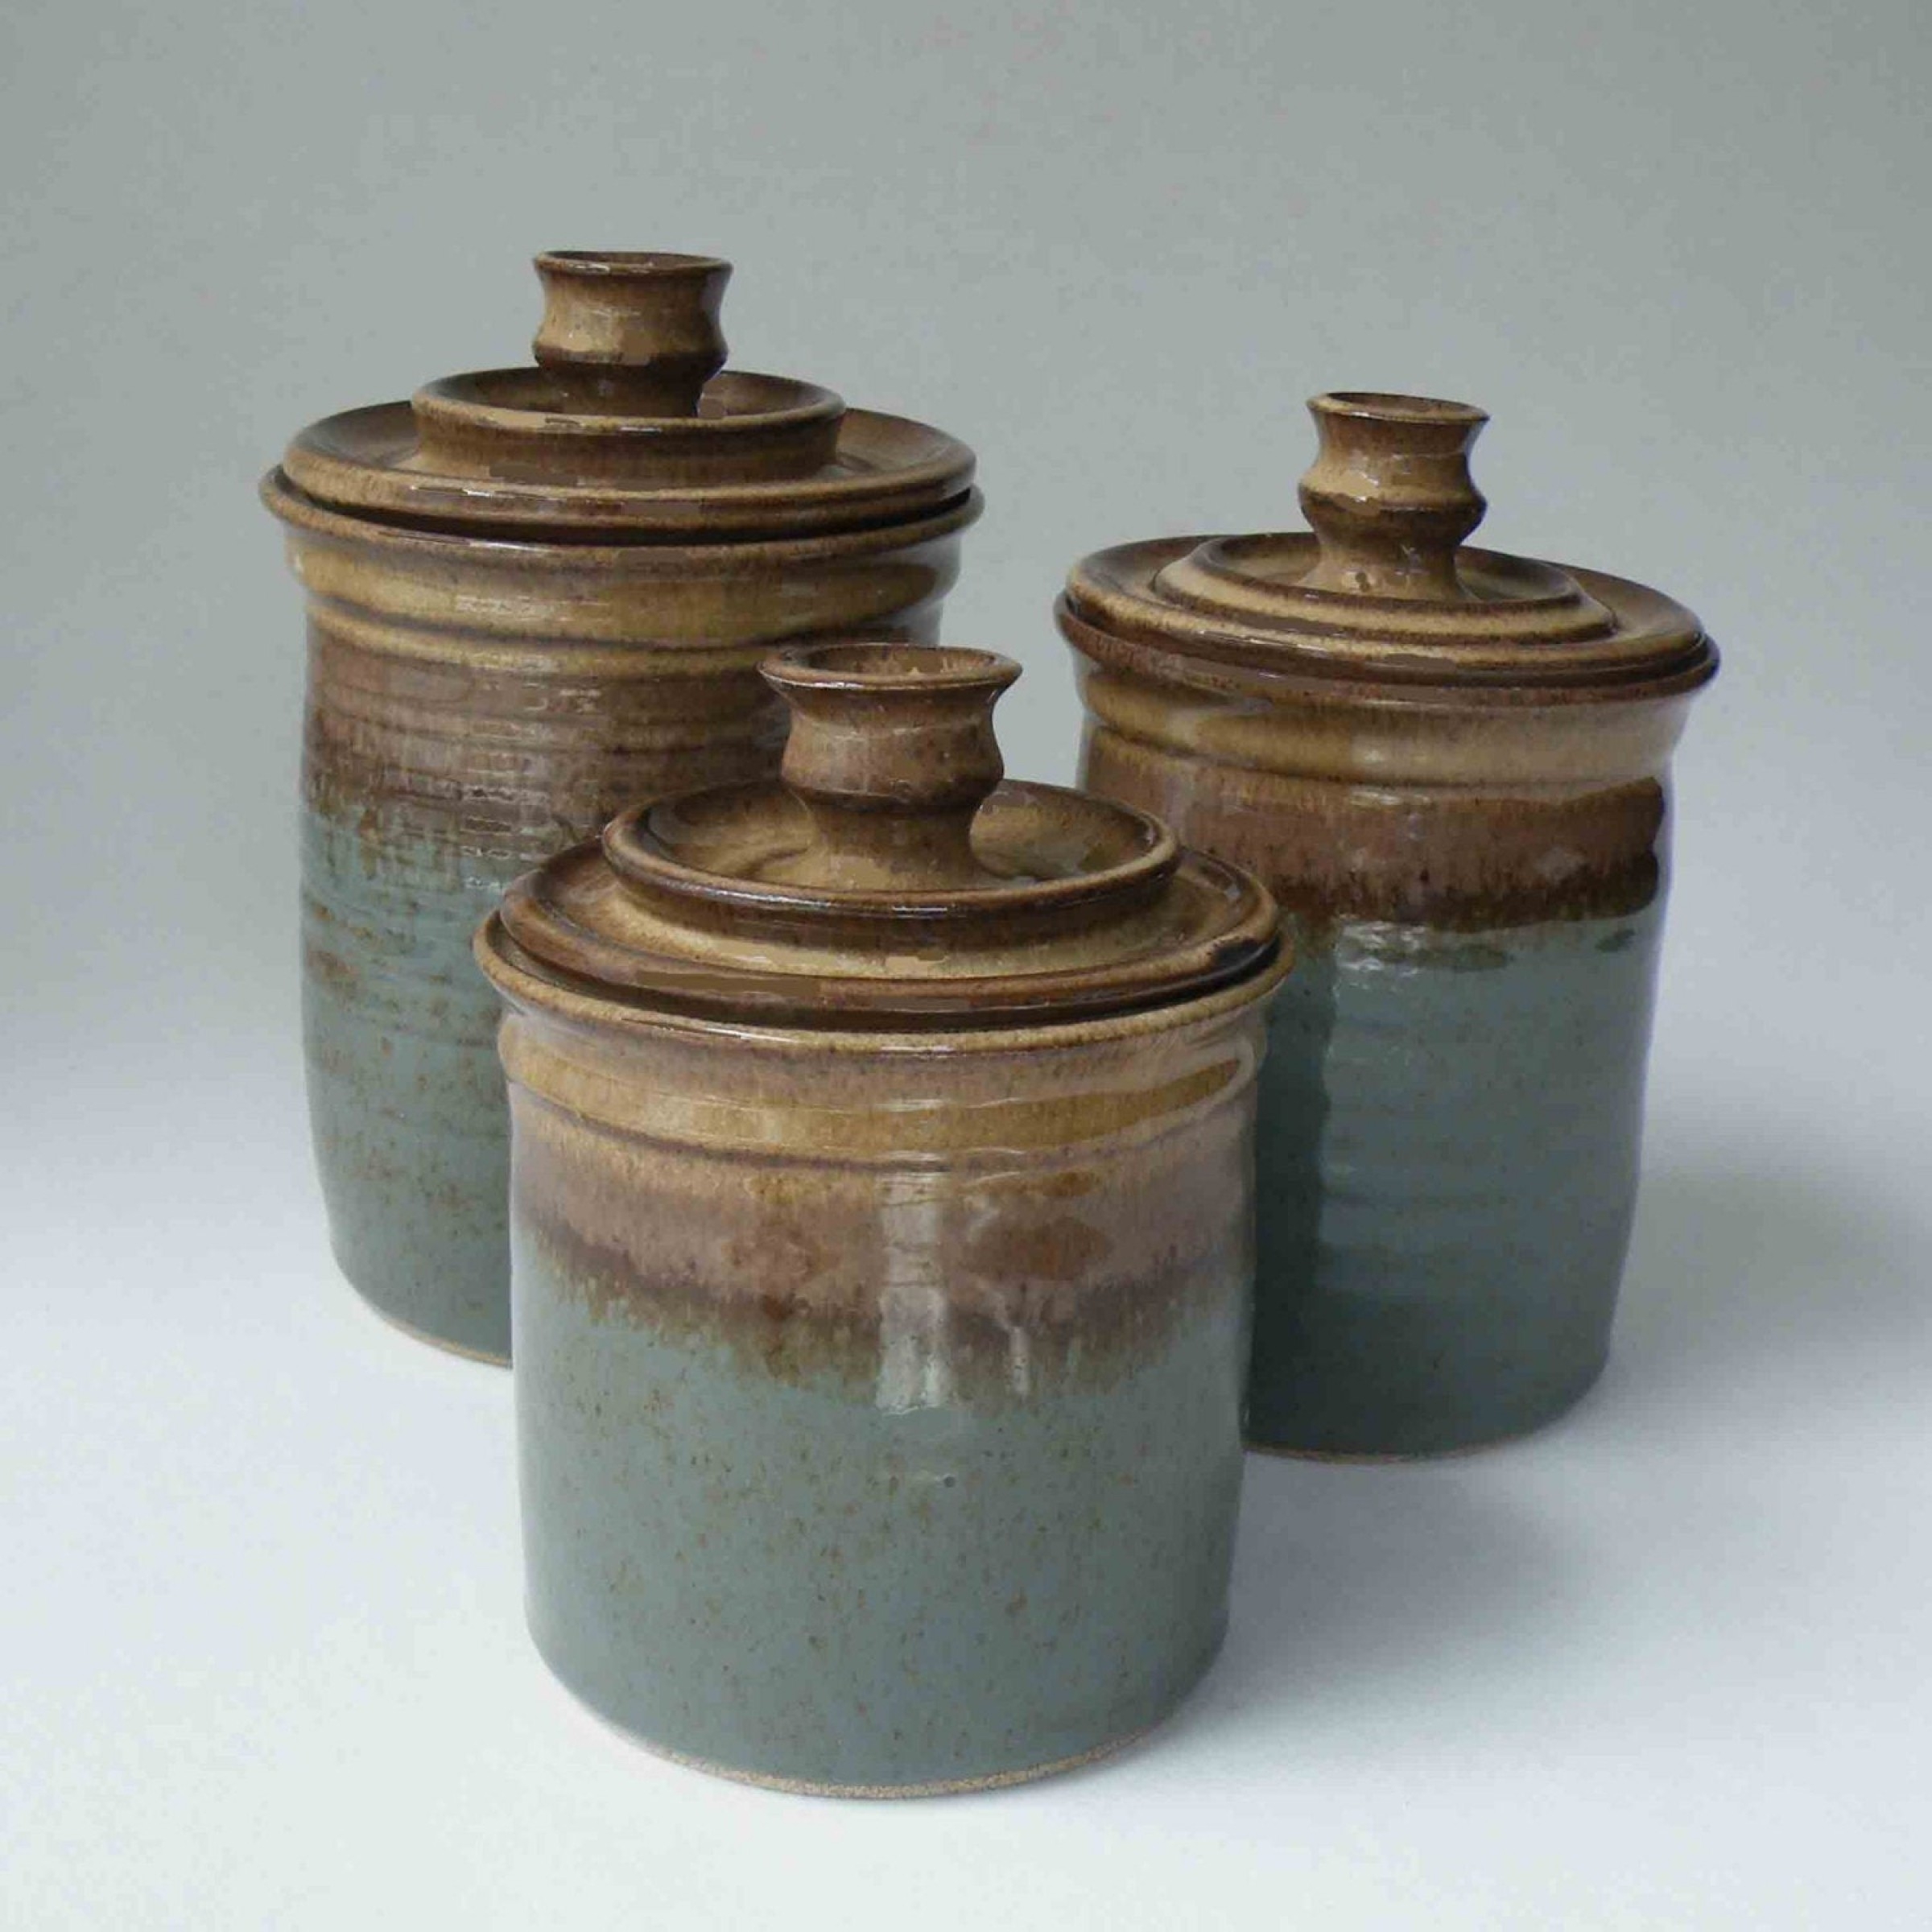 https://foter.com/photos/title/ceramic-kitchen-canisters-sets.jpg